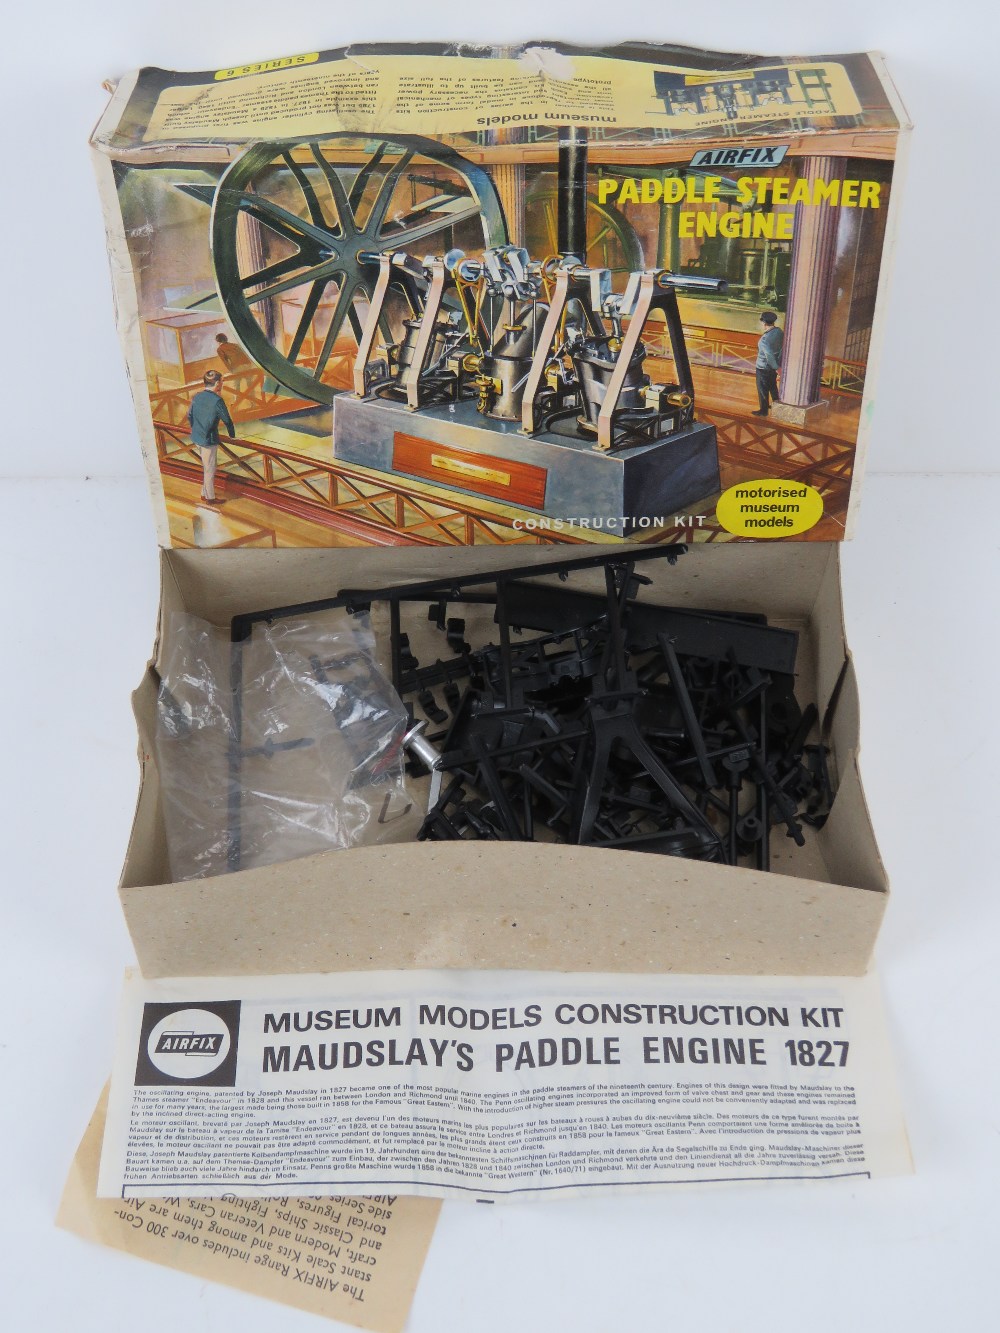 A vintage Airfix Paddle Steamer Engine kit, Series 6, motorised museum models.